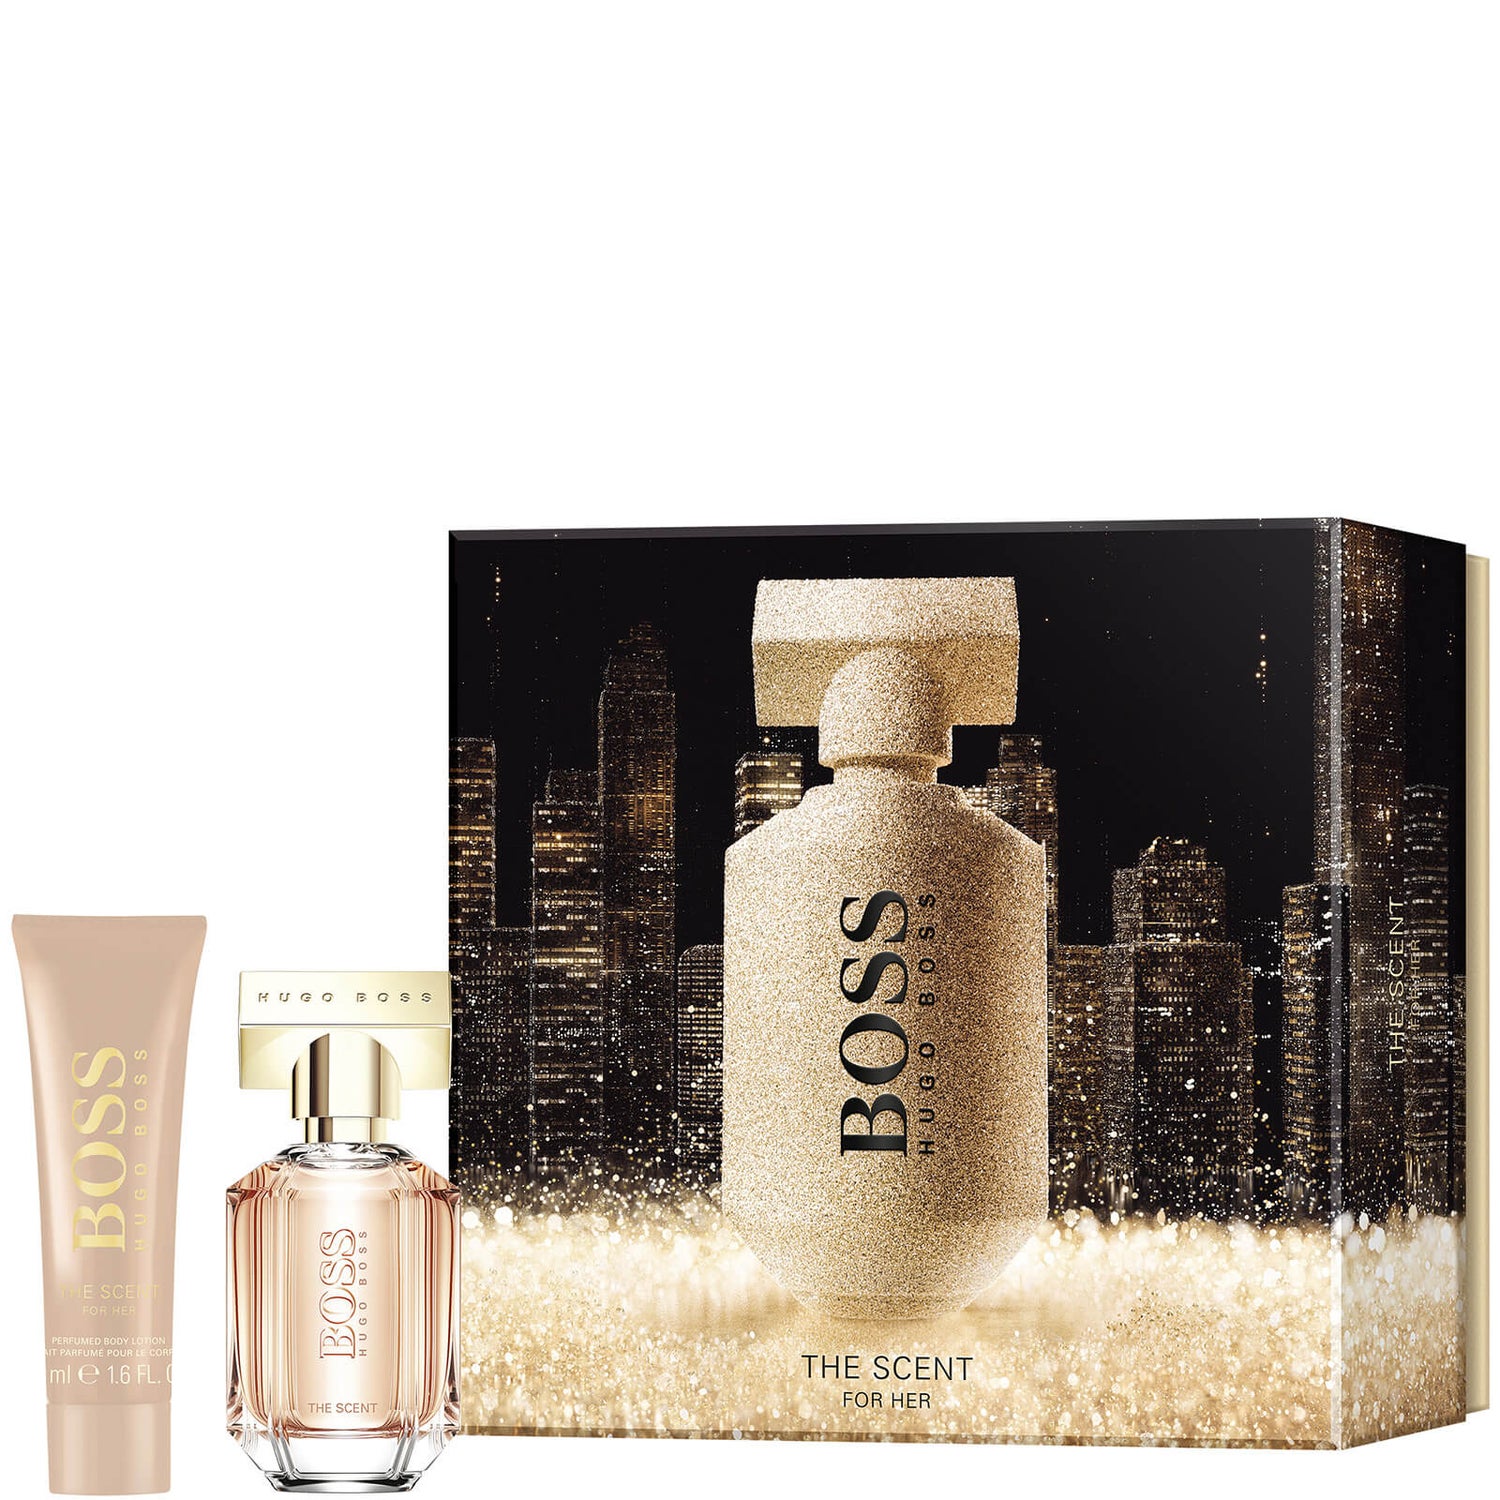 HUGO BOSS The Scent For Her Eau de Parfum 30ml Gift Set